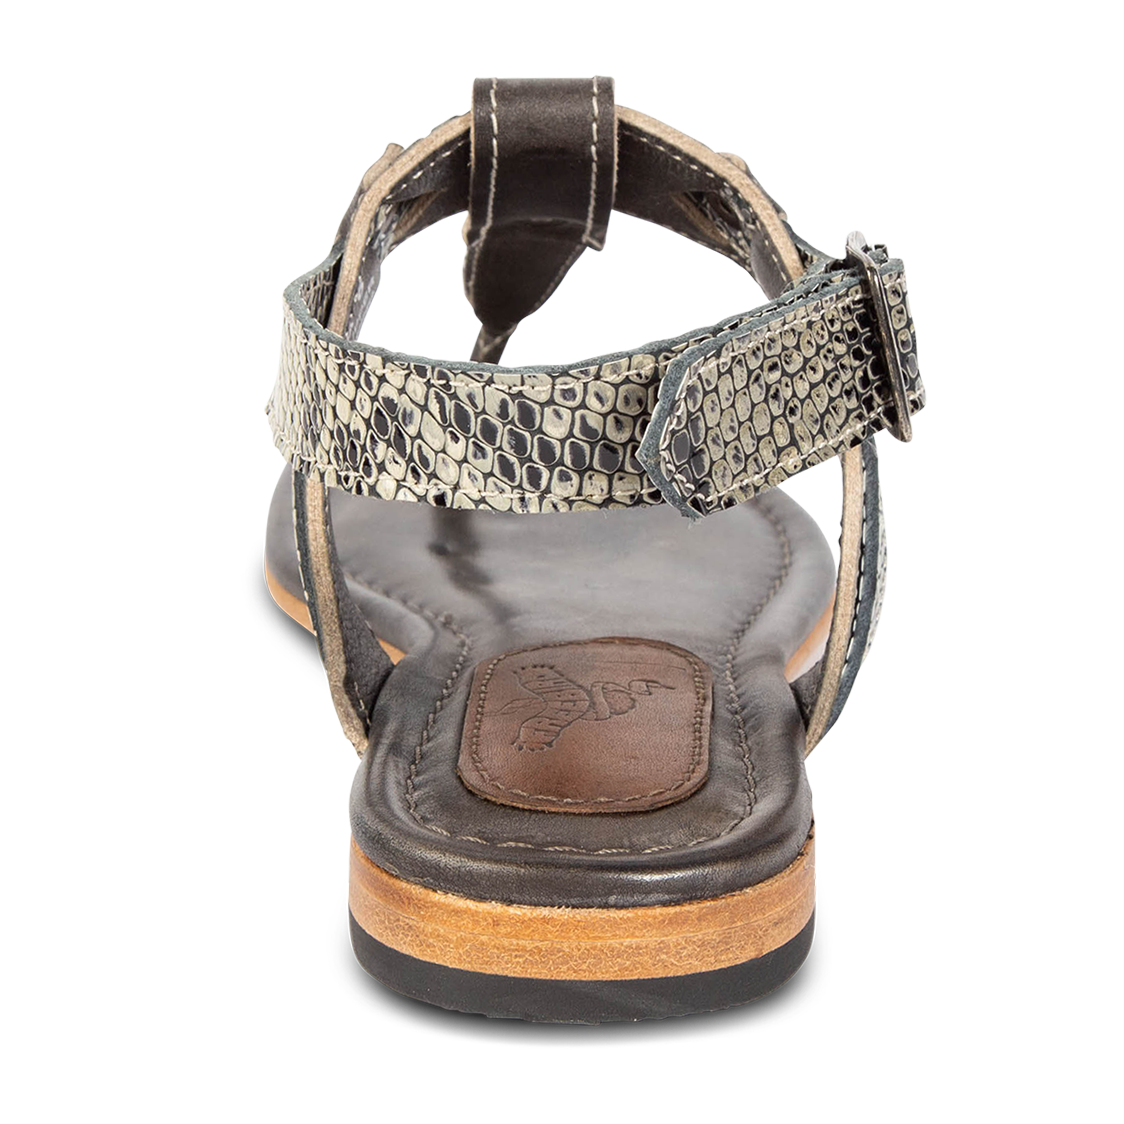 Back view showing FREEBIRD low heel on women's Sedona olive snake multi t-strap sandal